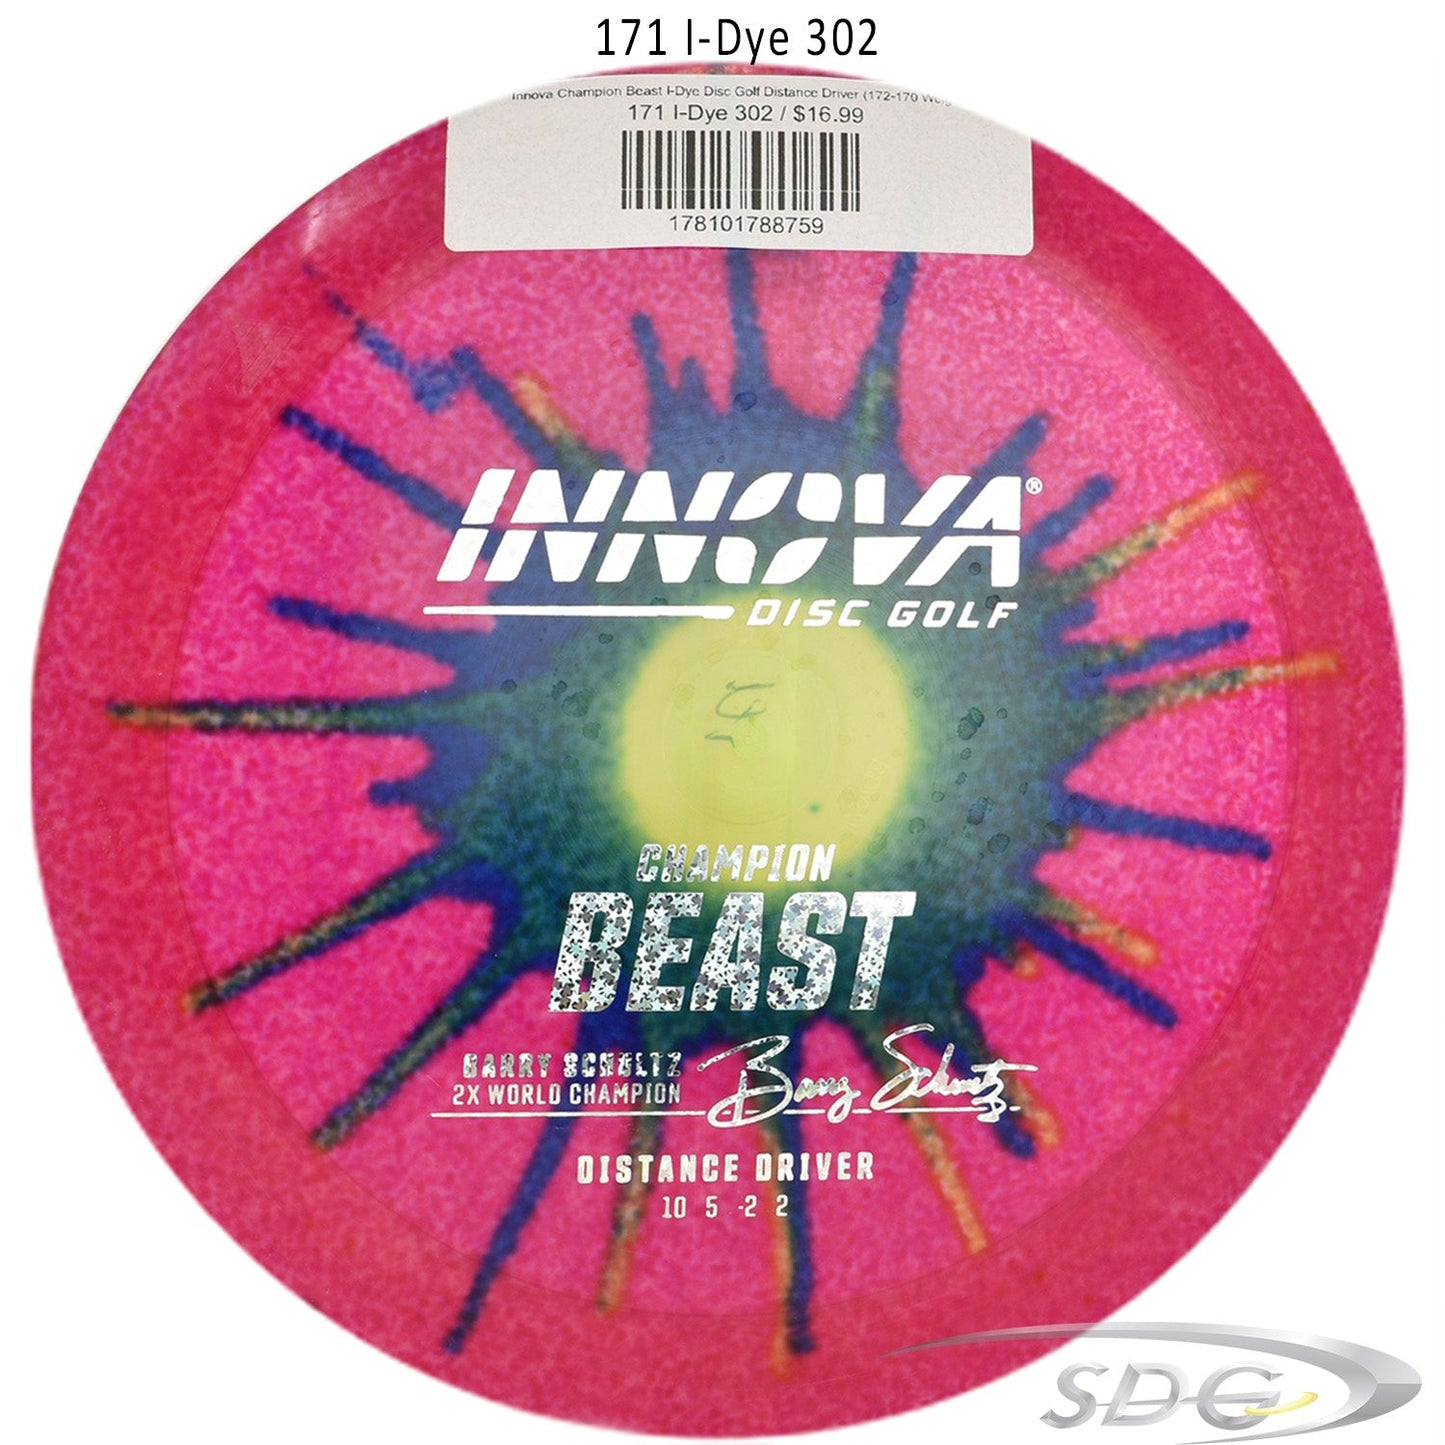 innova-champion-beast-i-dye-disc-golf-distance-driver 171 I-Dye 302